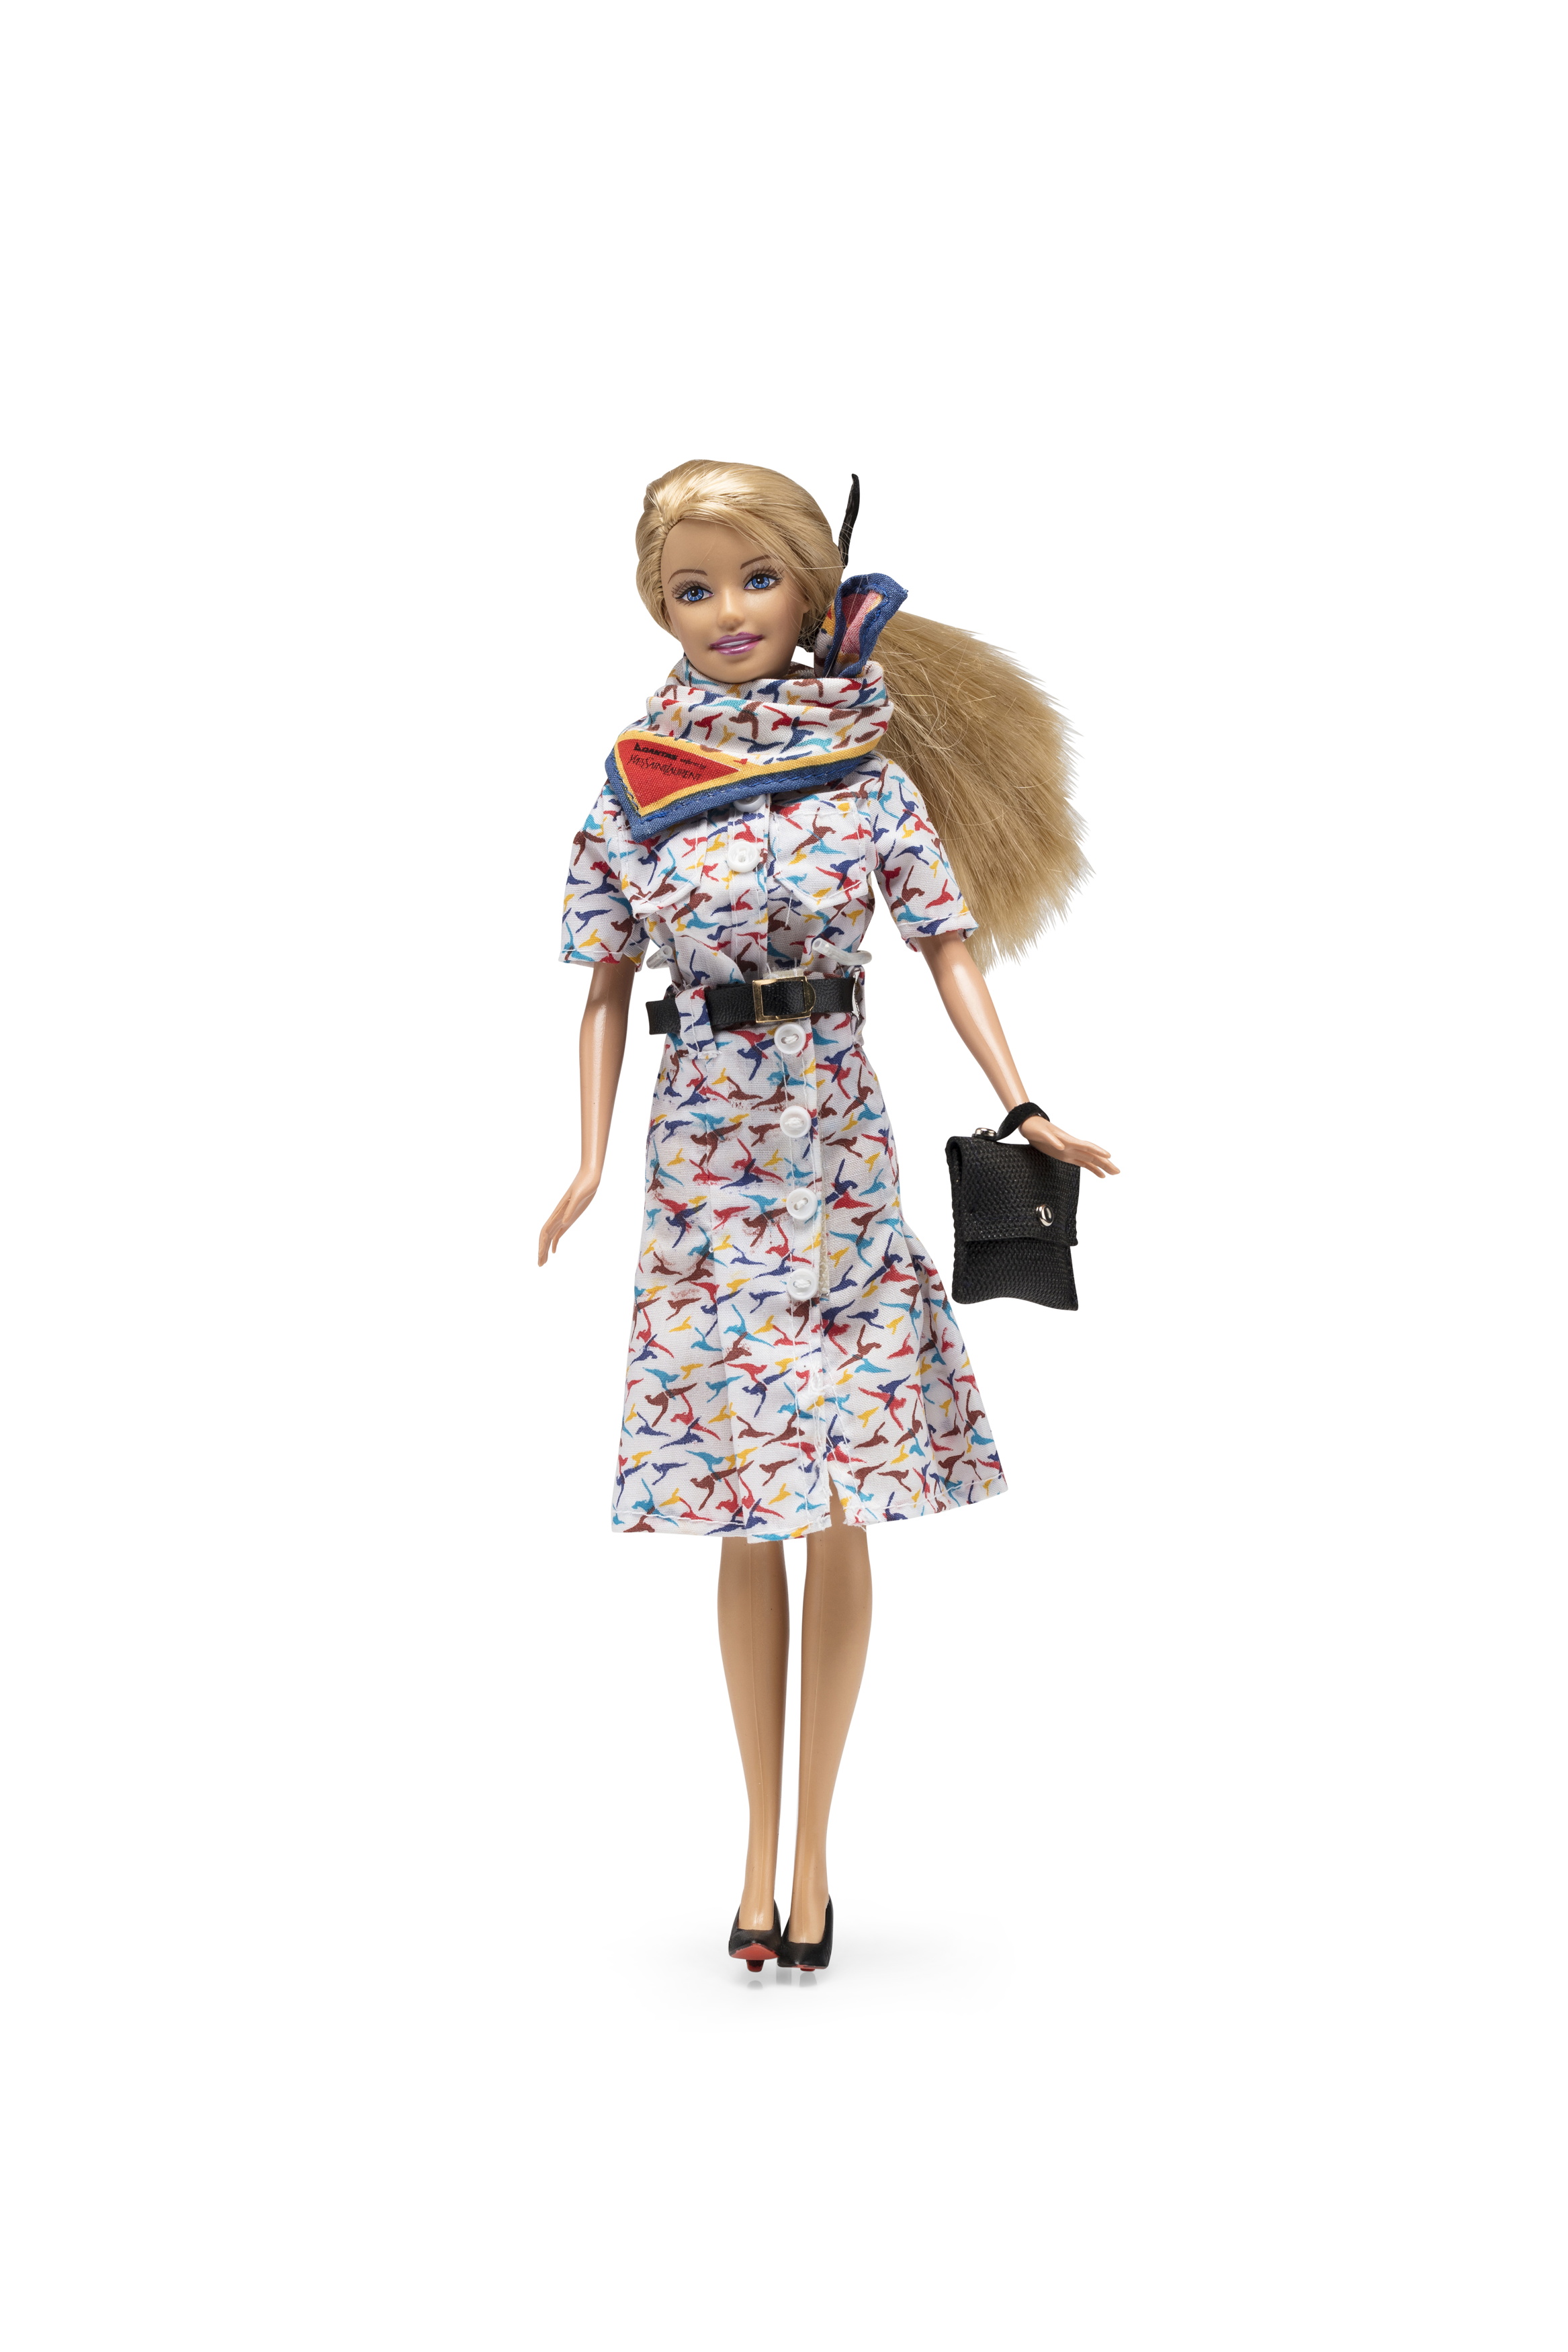 Barbie doll wearing Qantas flight attendant uniform from 1987-1994